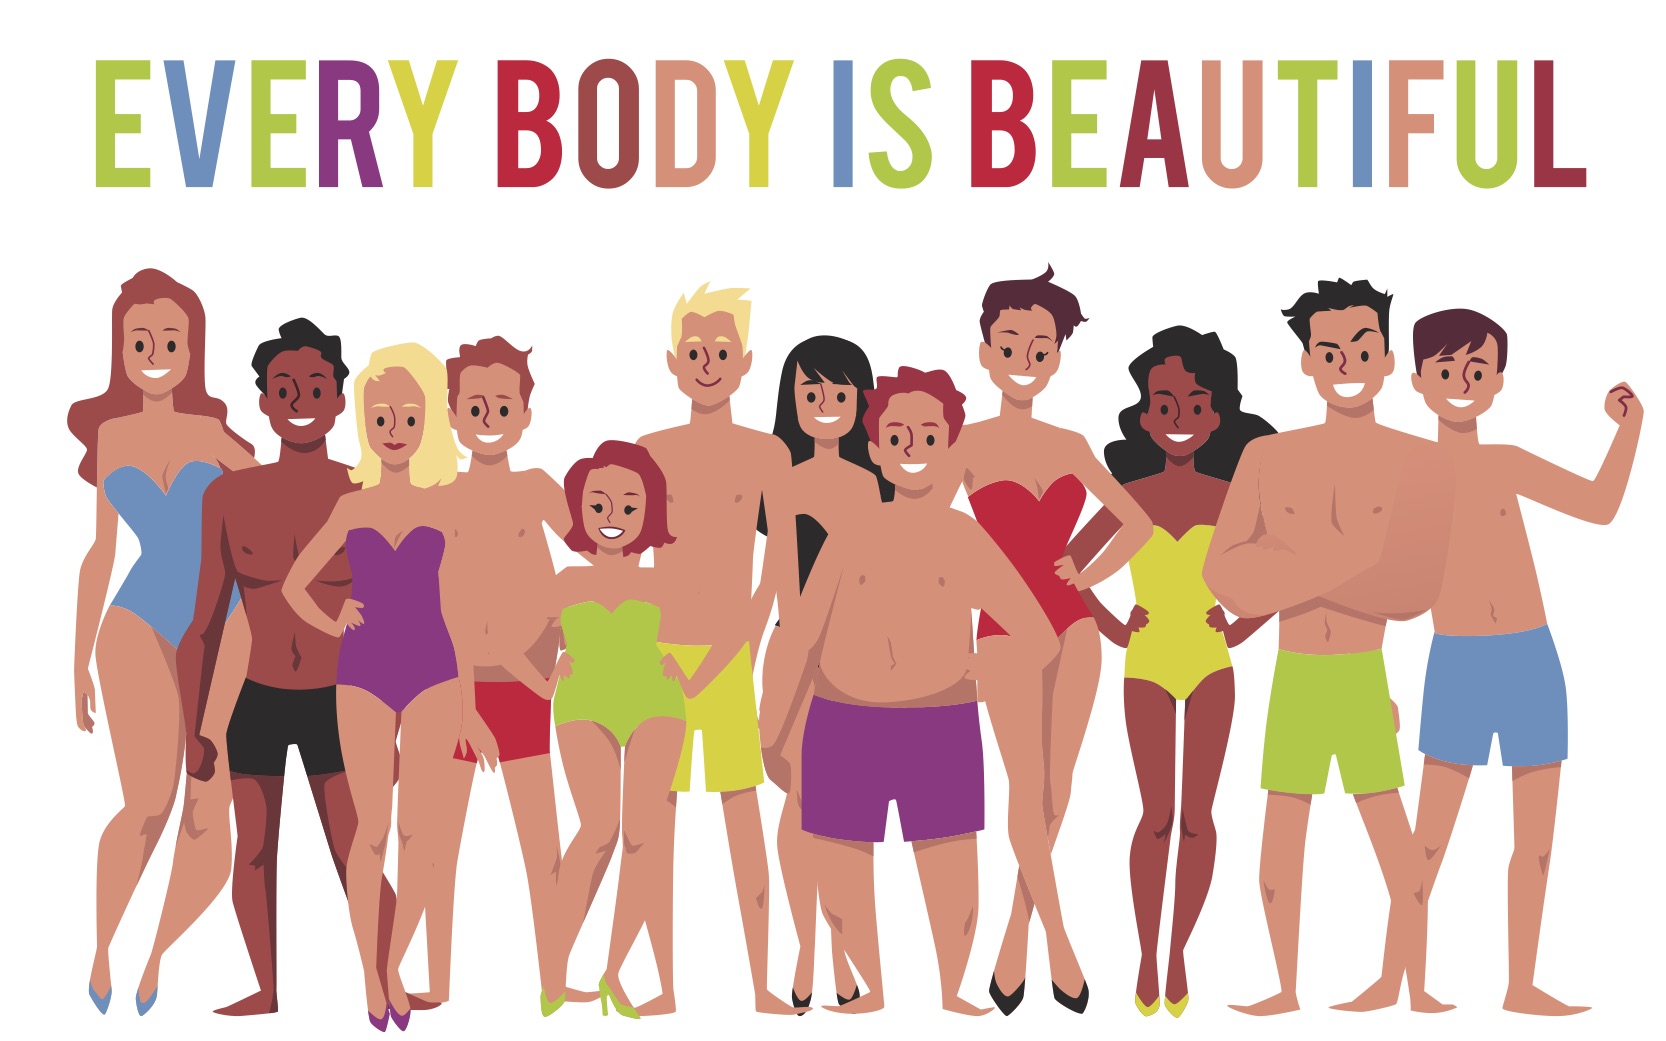 Everybody is beautiful body positivity message